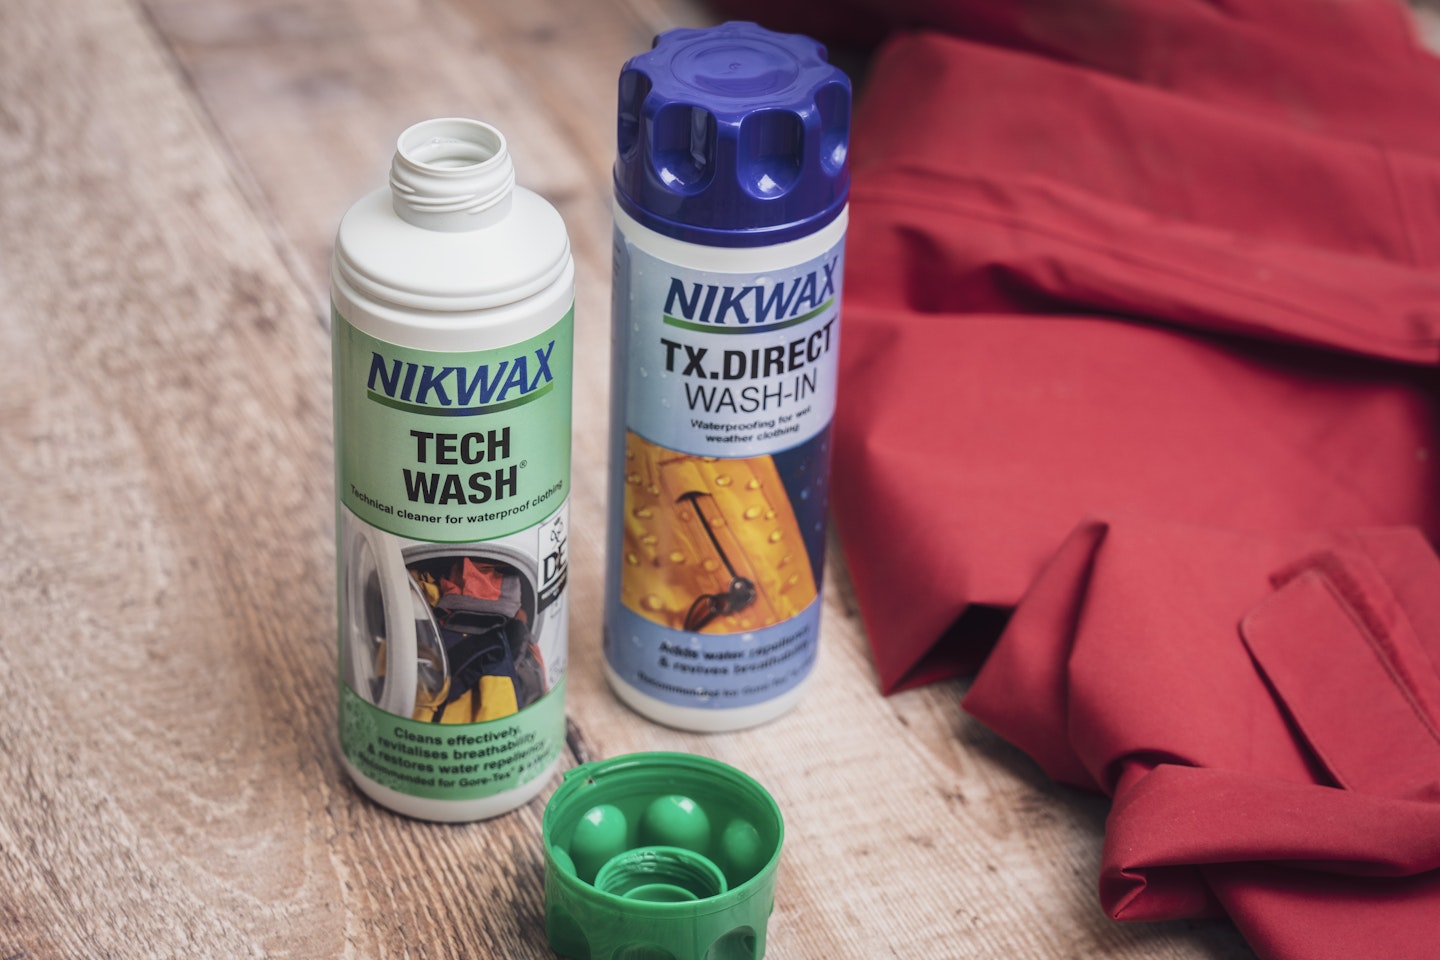 Nikwax Tech Wash  Portwest - The Outdoor Shop